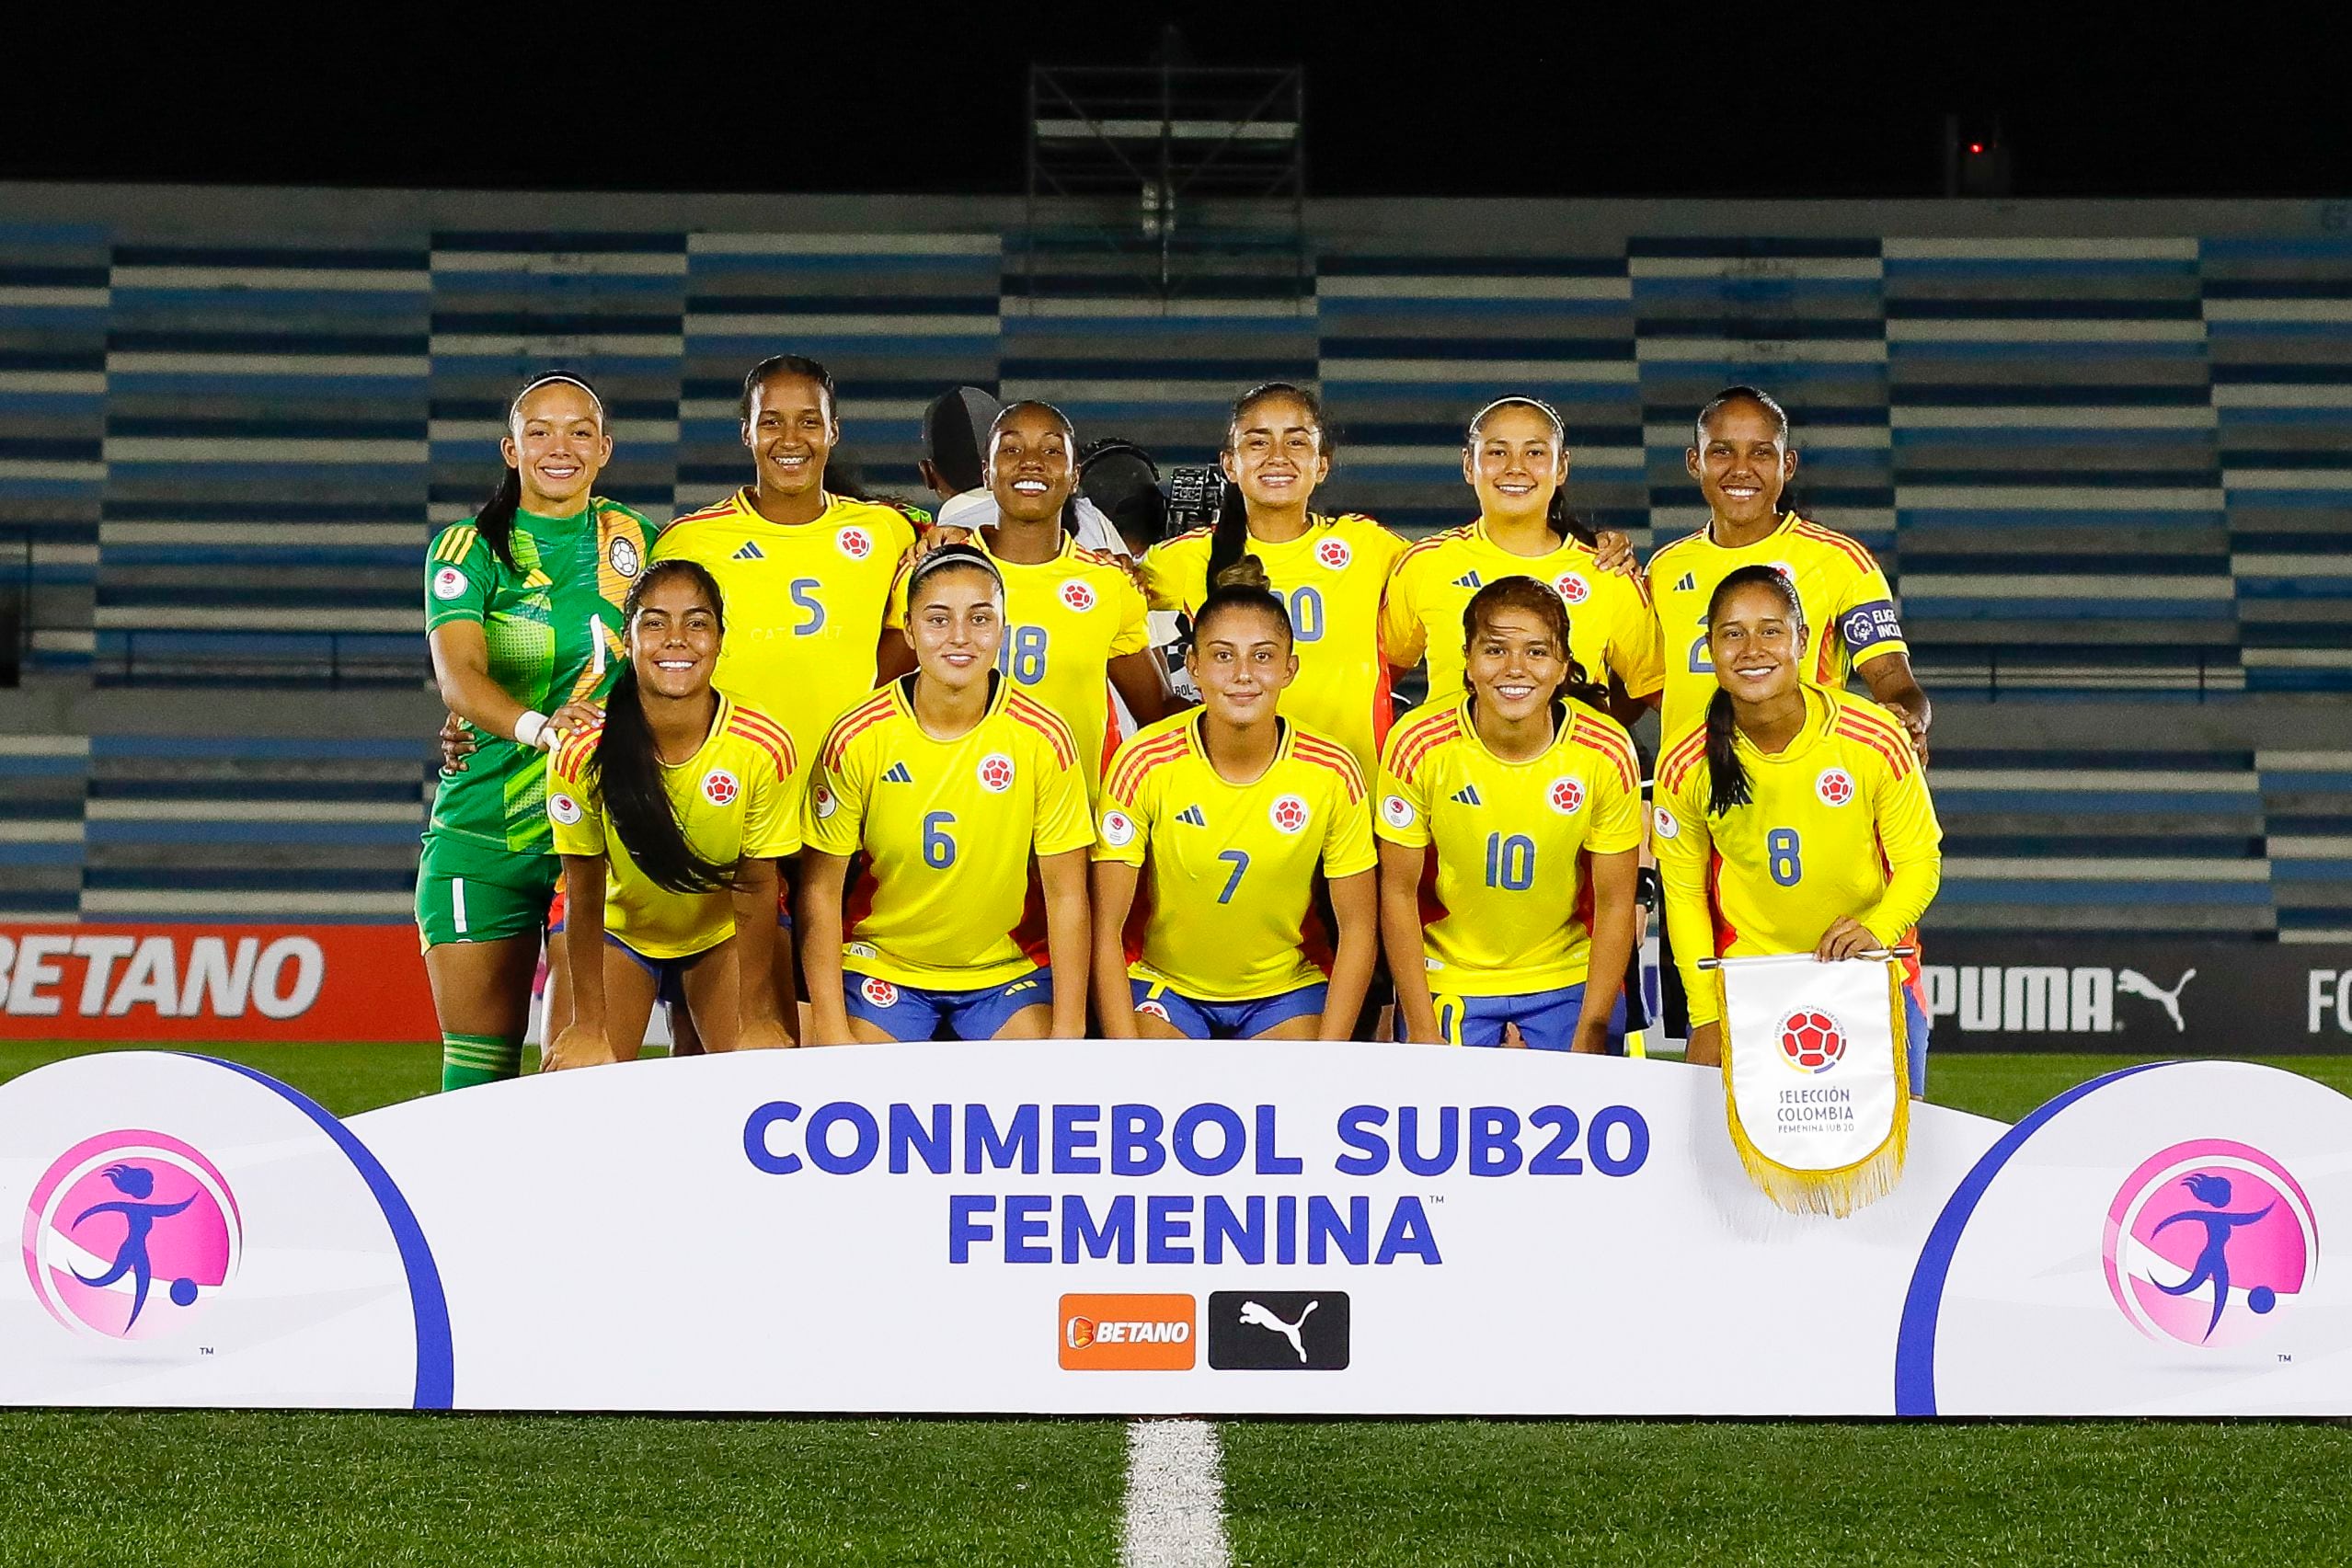 EN VIVO - Colombia vs. Paraguay se enfrentan en la última fecha del Sudamericano femenino sub-20